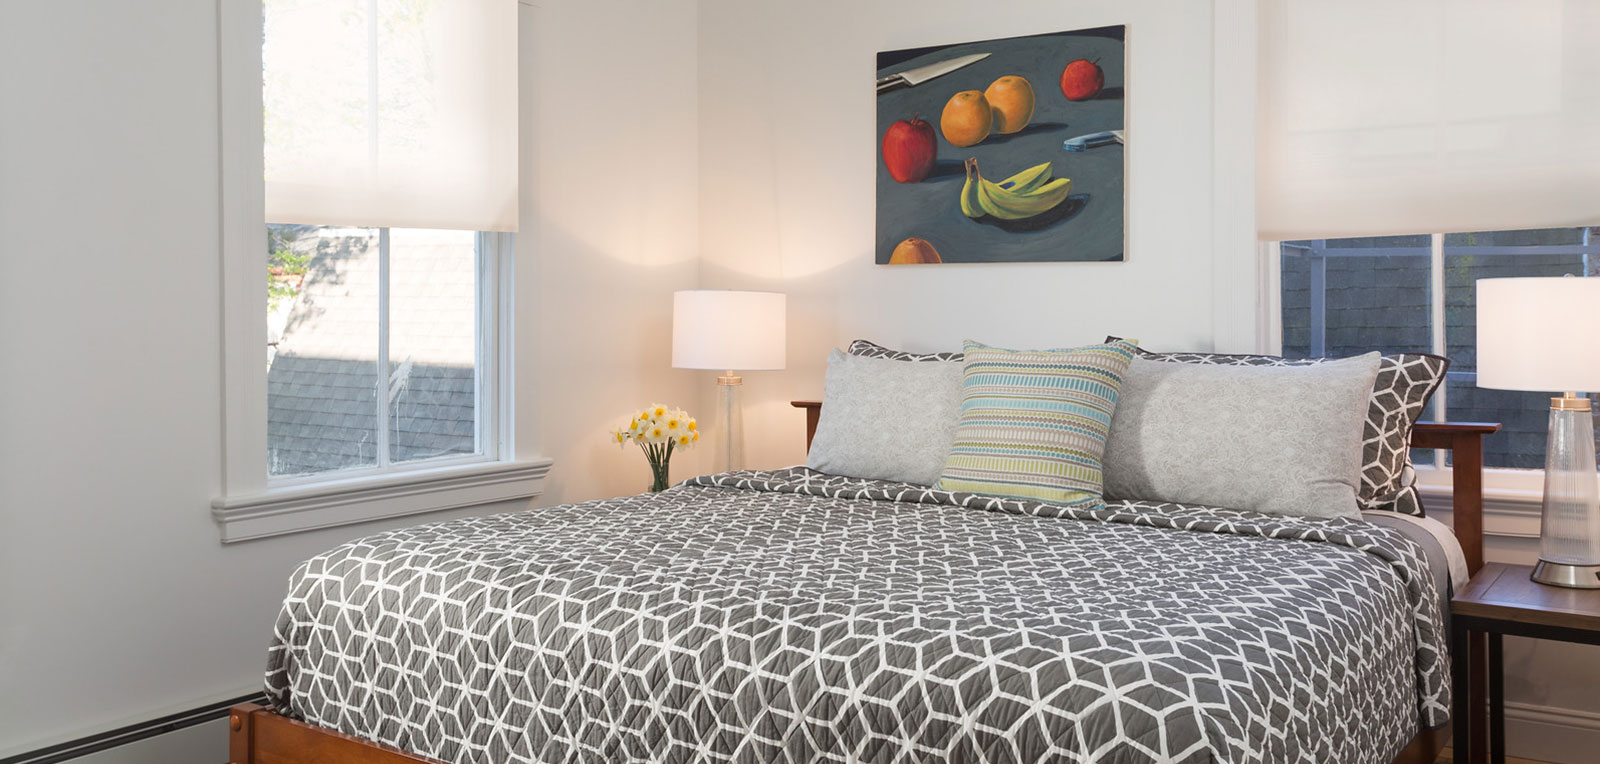 1BR Apartment Bedroom + Painting | ADMIRAL SIMS B&B, Newport Rhode Island